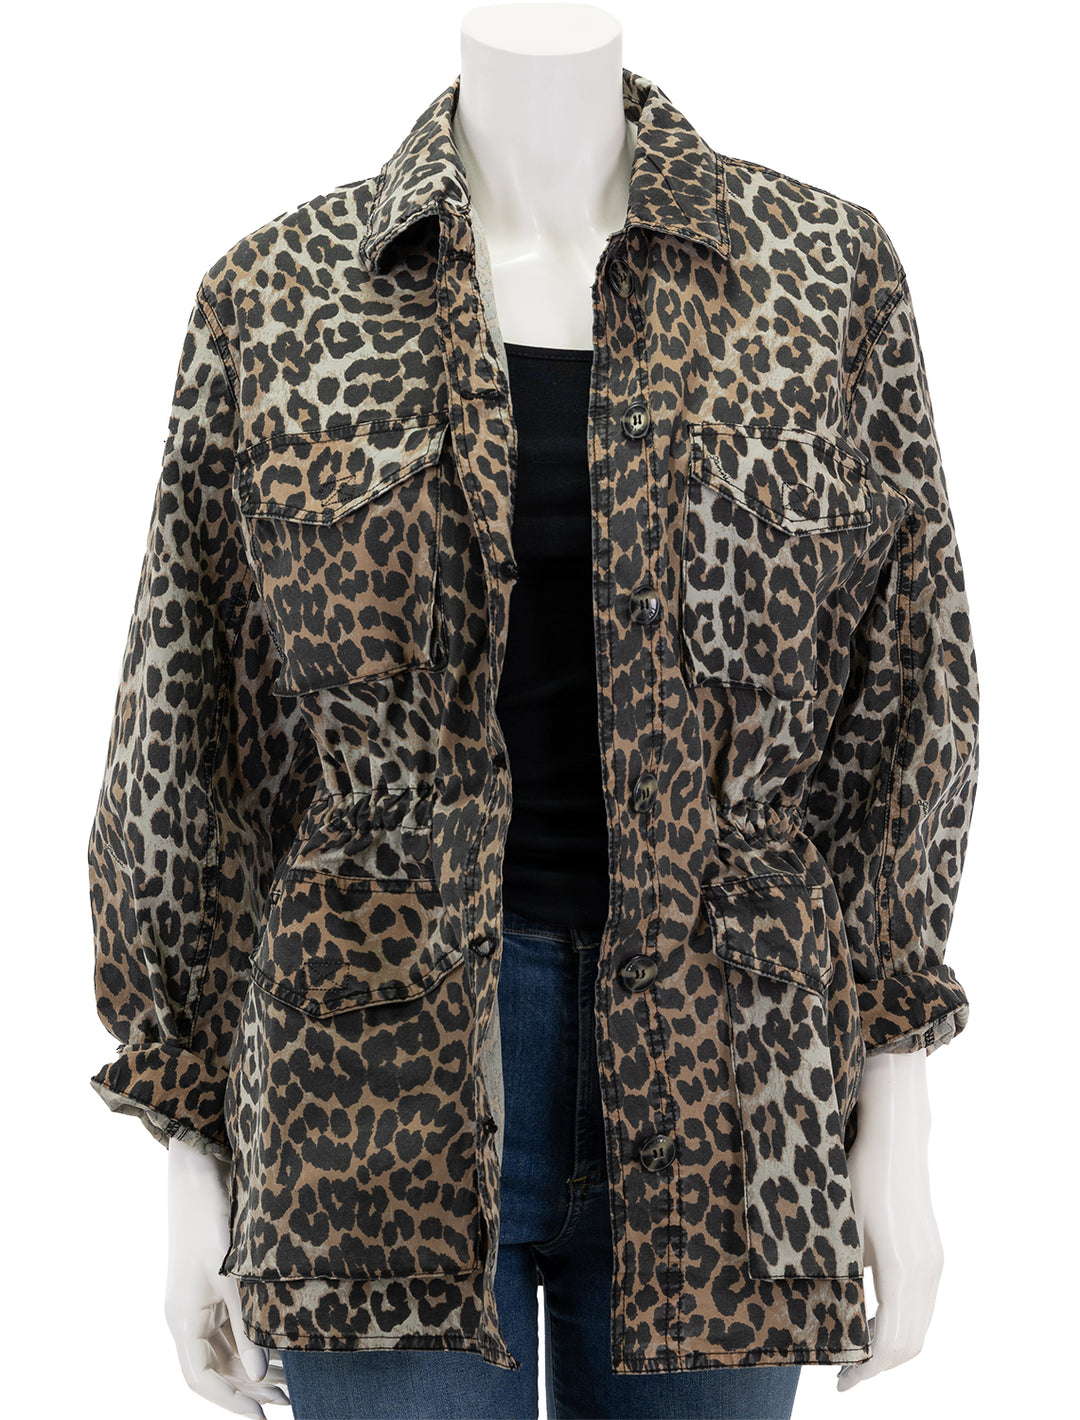 Front view of GANNI's cotton canvas jacket in almond milk leopard, unbuttoned.